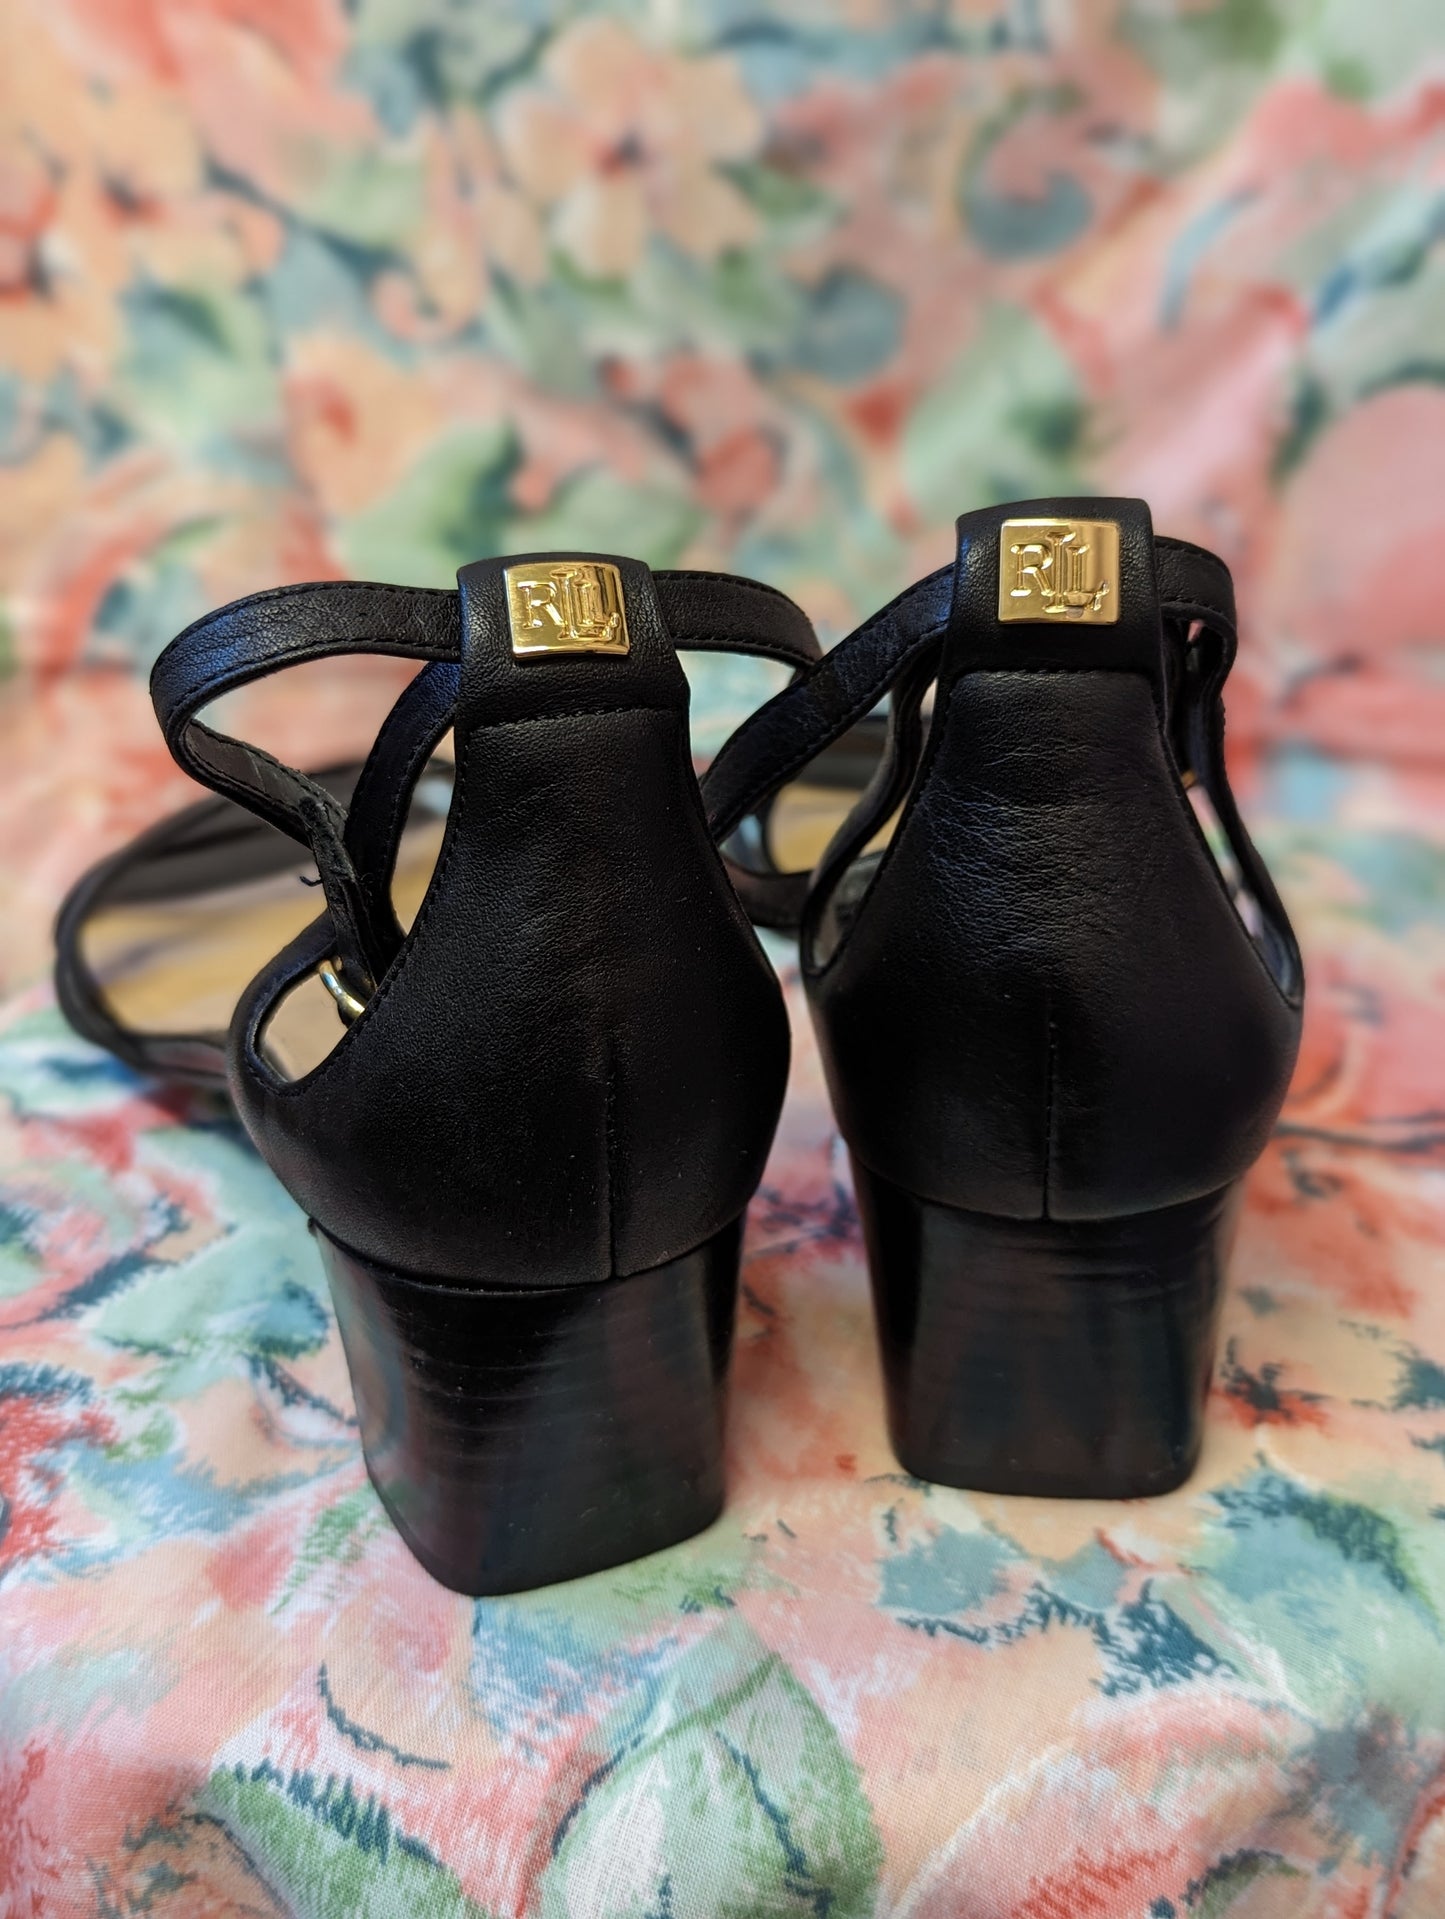 Ralph Lauren Black Leather Strappy Low Heel Sandals Size 6